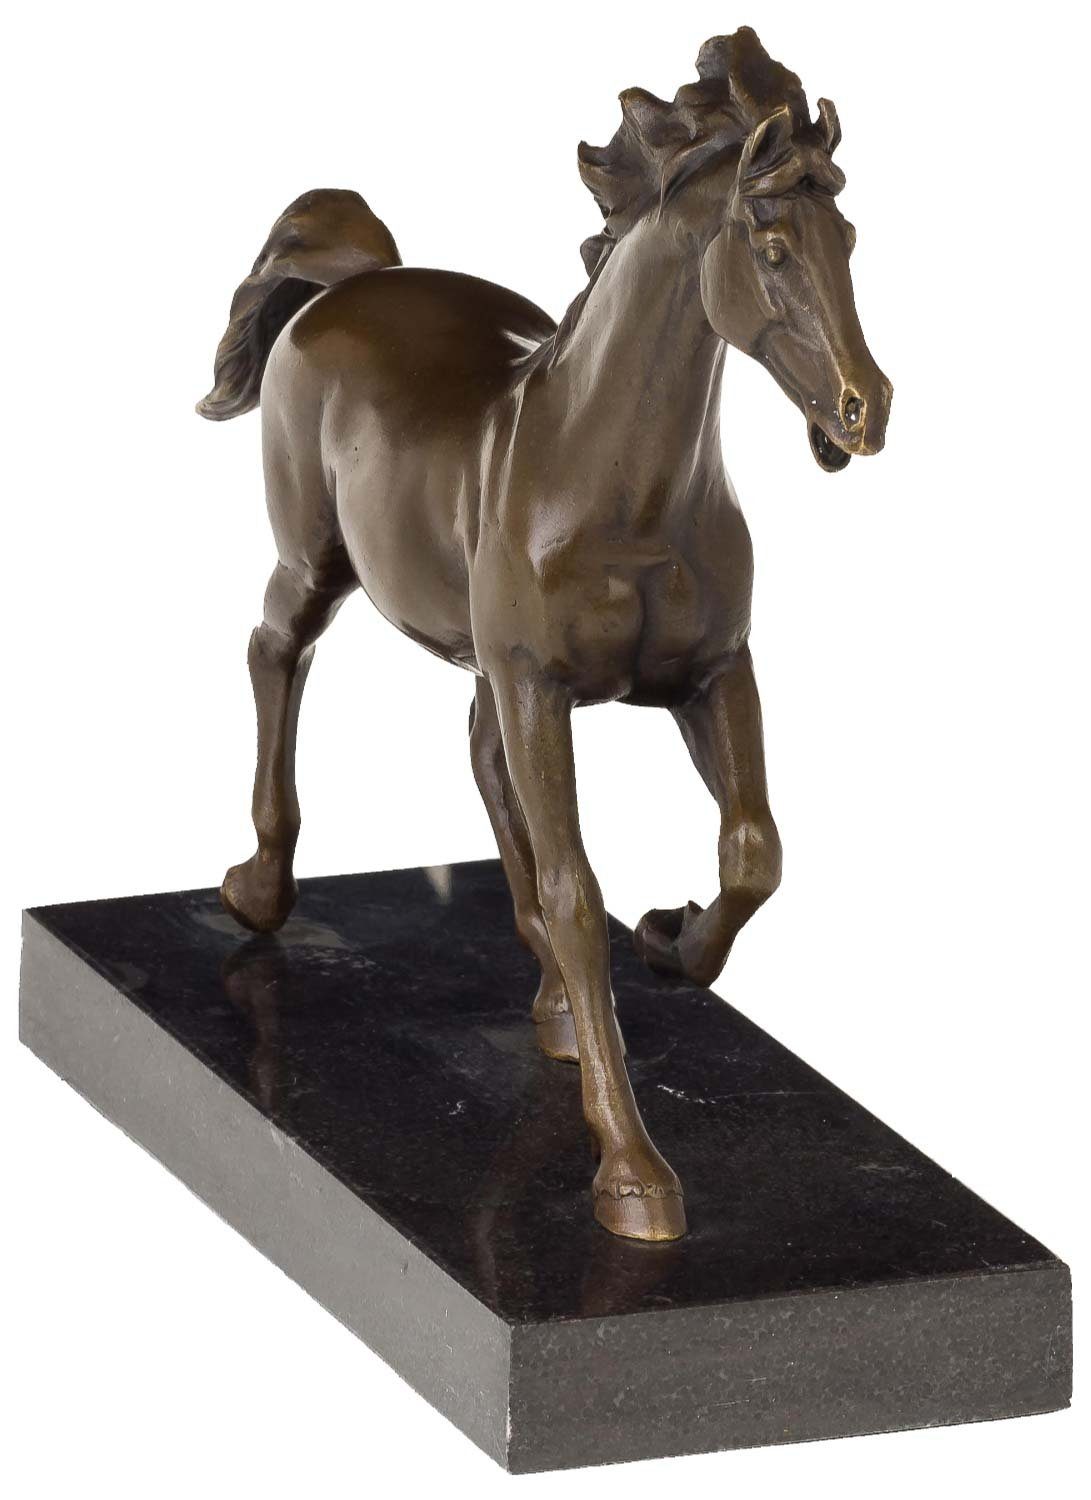 Antik-Stil - im 26cm Bronze Skulptur Statue Figur Bronzeskulptur Skulptur Aubaho Pferd